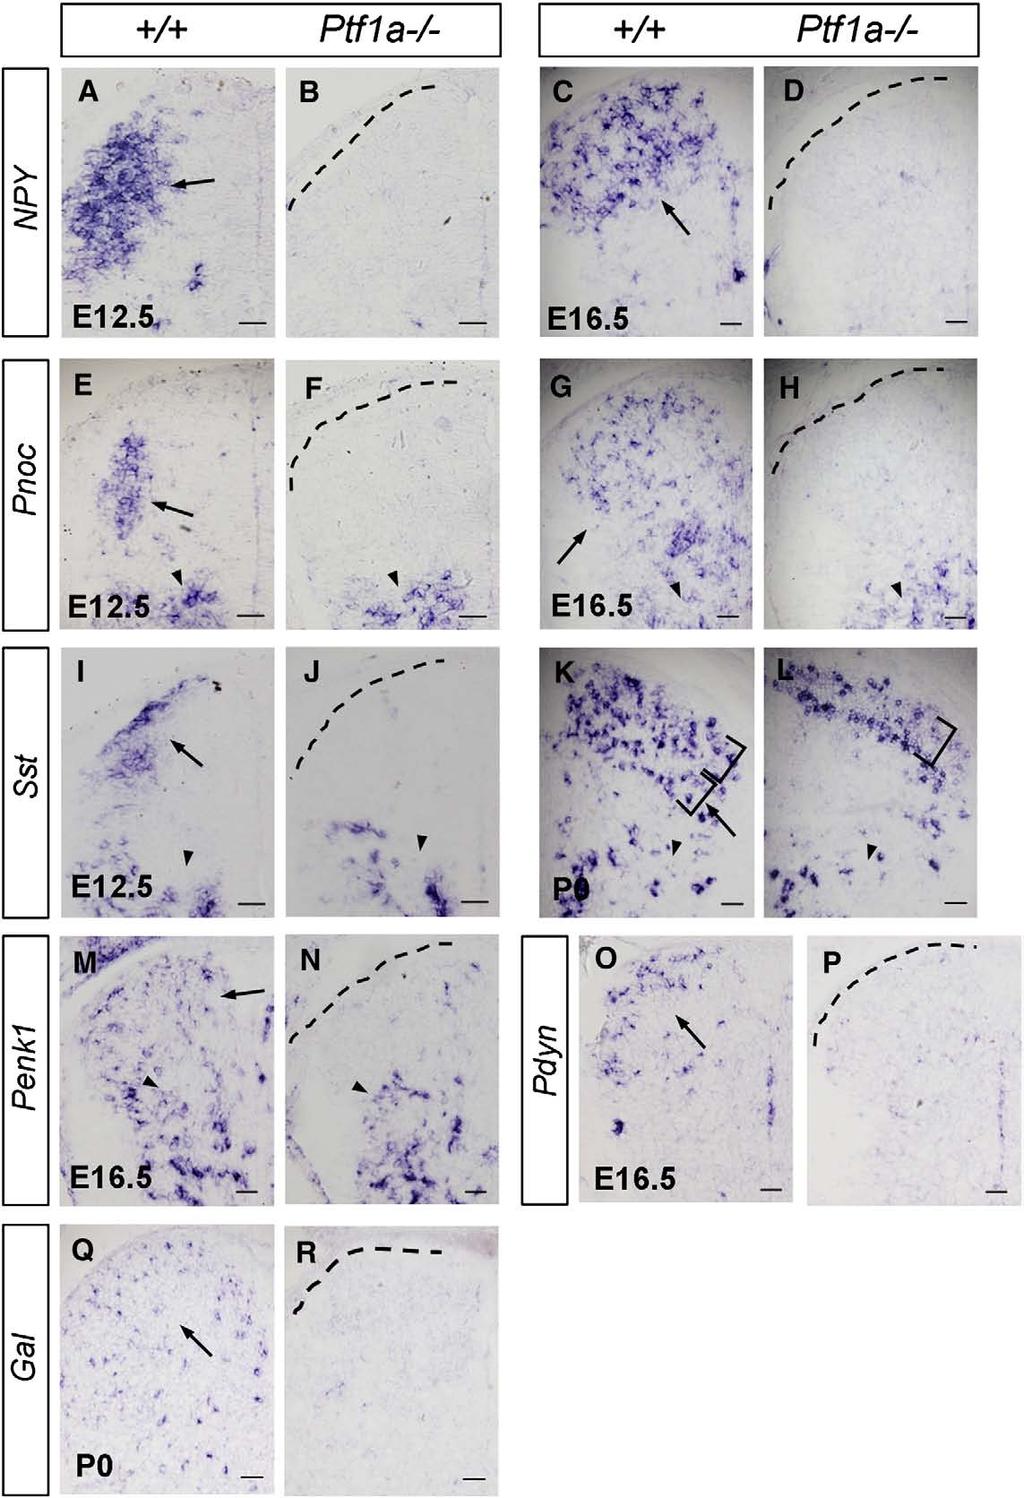 M. Huang et al. / Developmental Biology 322 (2008) 394 405 401 Fig. 5. Loss of peptide gene expression in Ptf1a / mice.